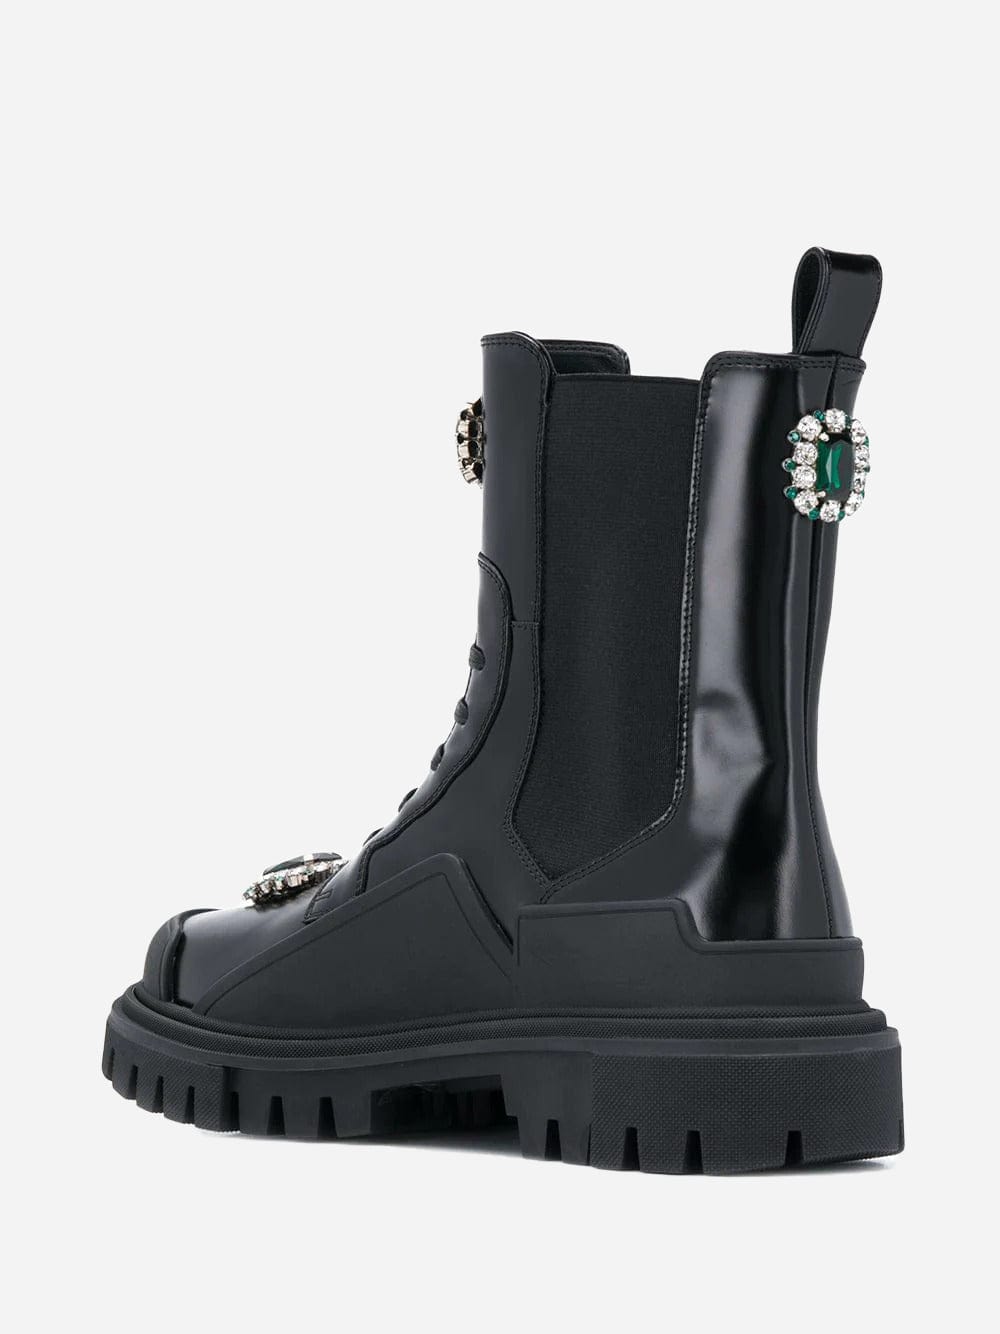 Dolce & Gabbana Crystal-Embellished Boots